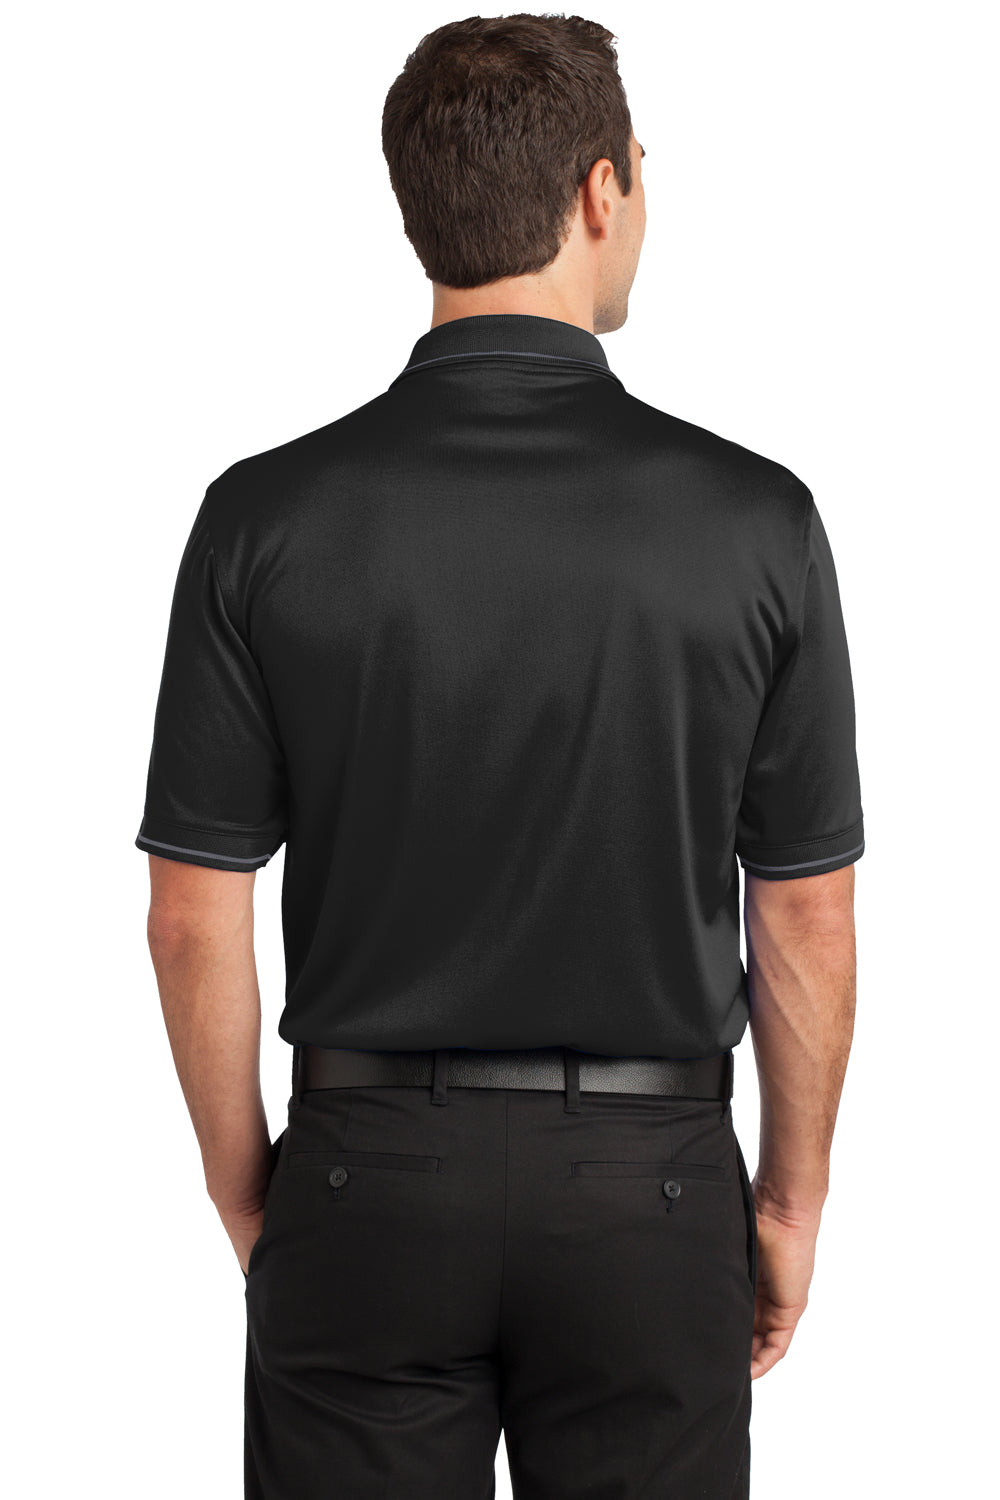 CornerStone CS415 Mens Select Moisture Wicking Short Sleeve Polo Shirt w/ Pocket Black Back